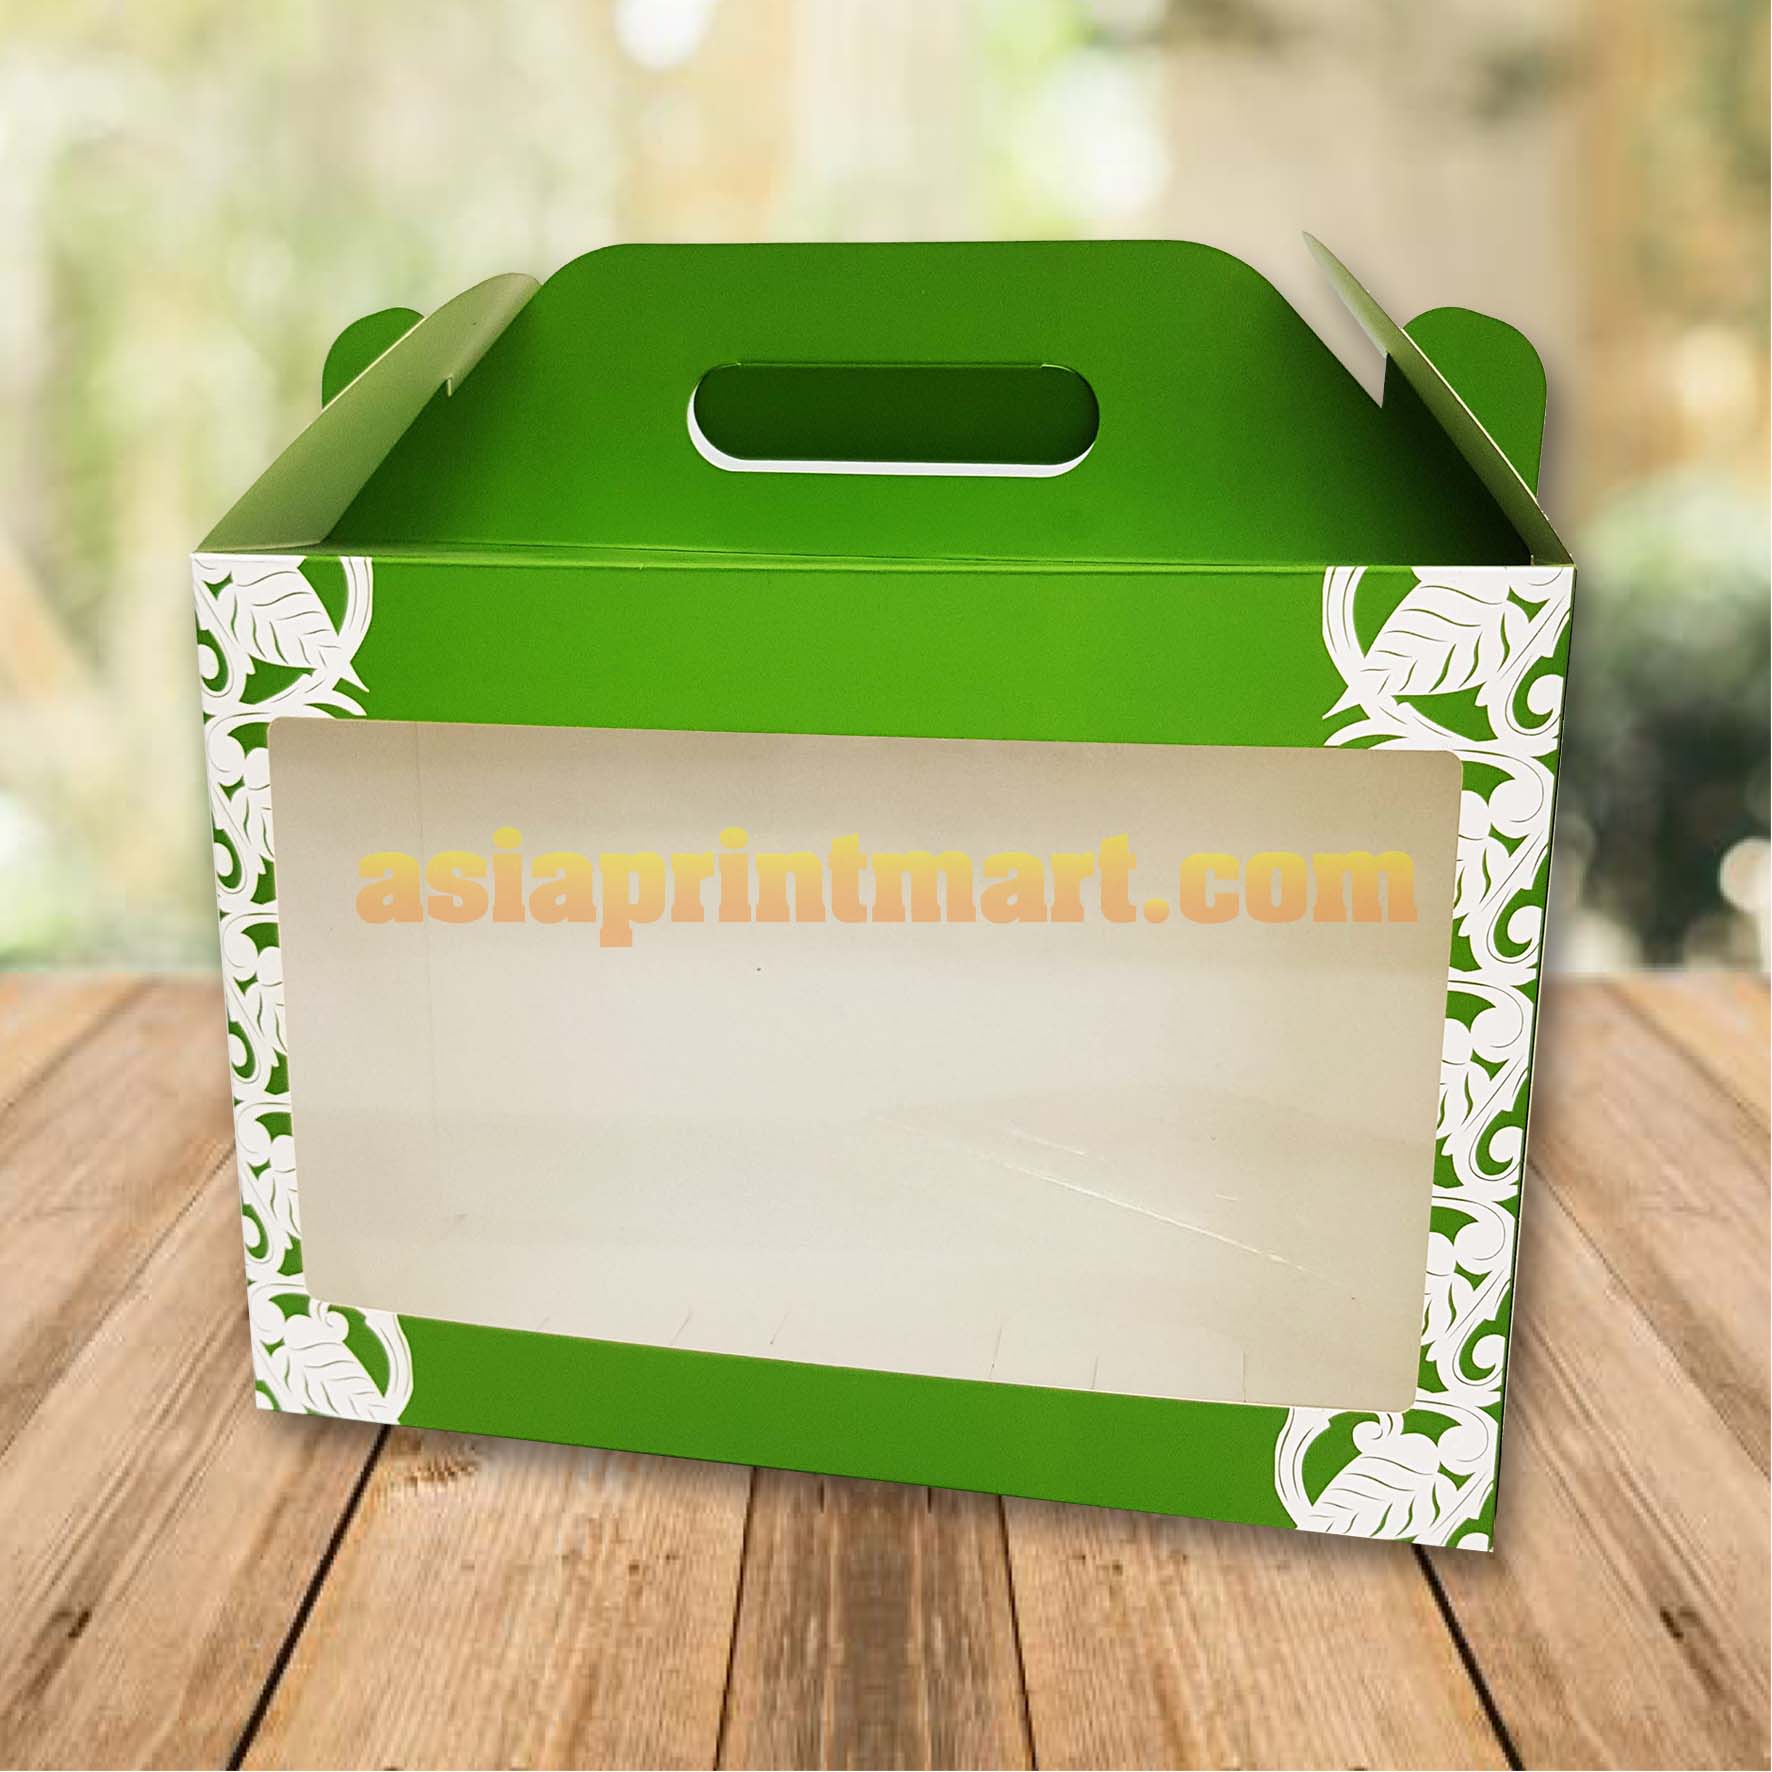 cetak kotak telekung | ready made packing box | custom made packing box | mencetak kotak kek raya | raya paper bags 